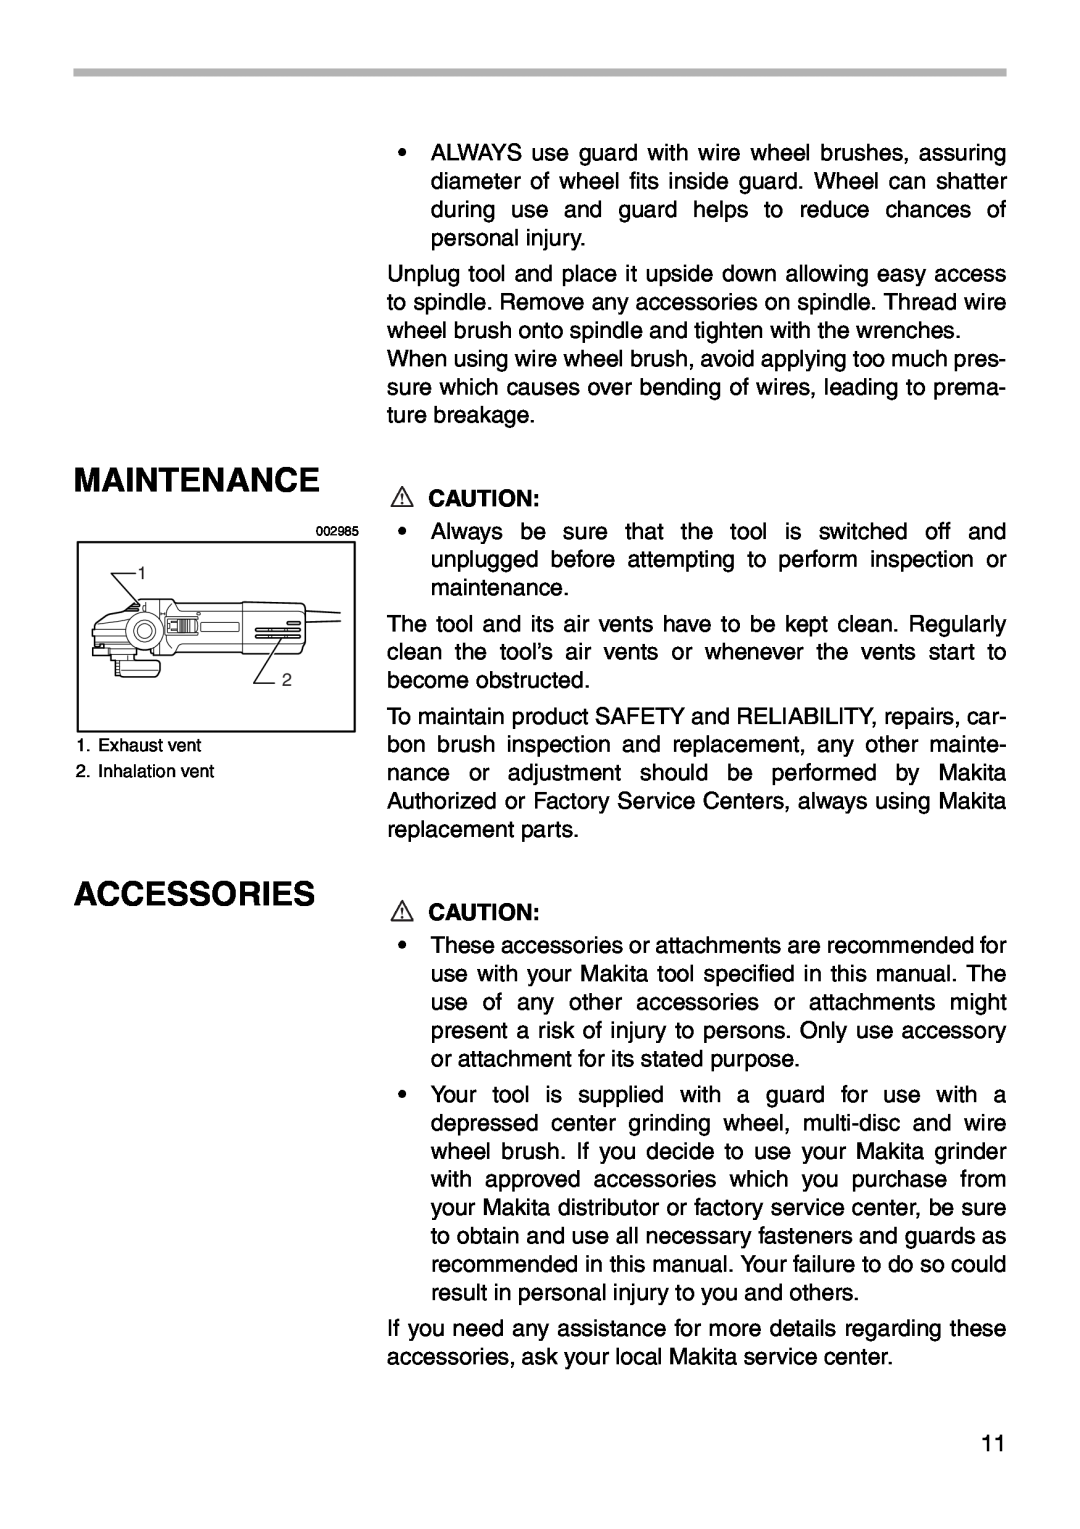 Makita 9566CV instruction manual Maintenance, Accessories, Exhaust vent 2. Inhalation vent 